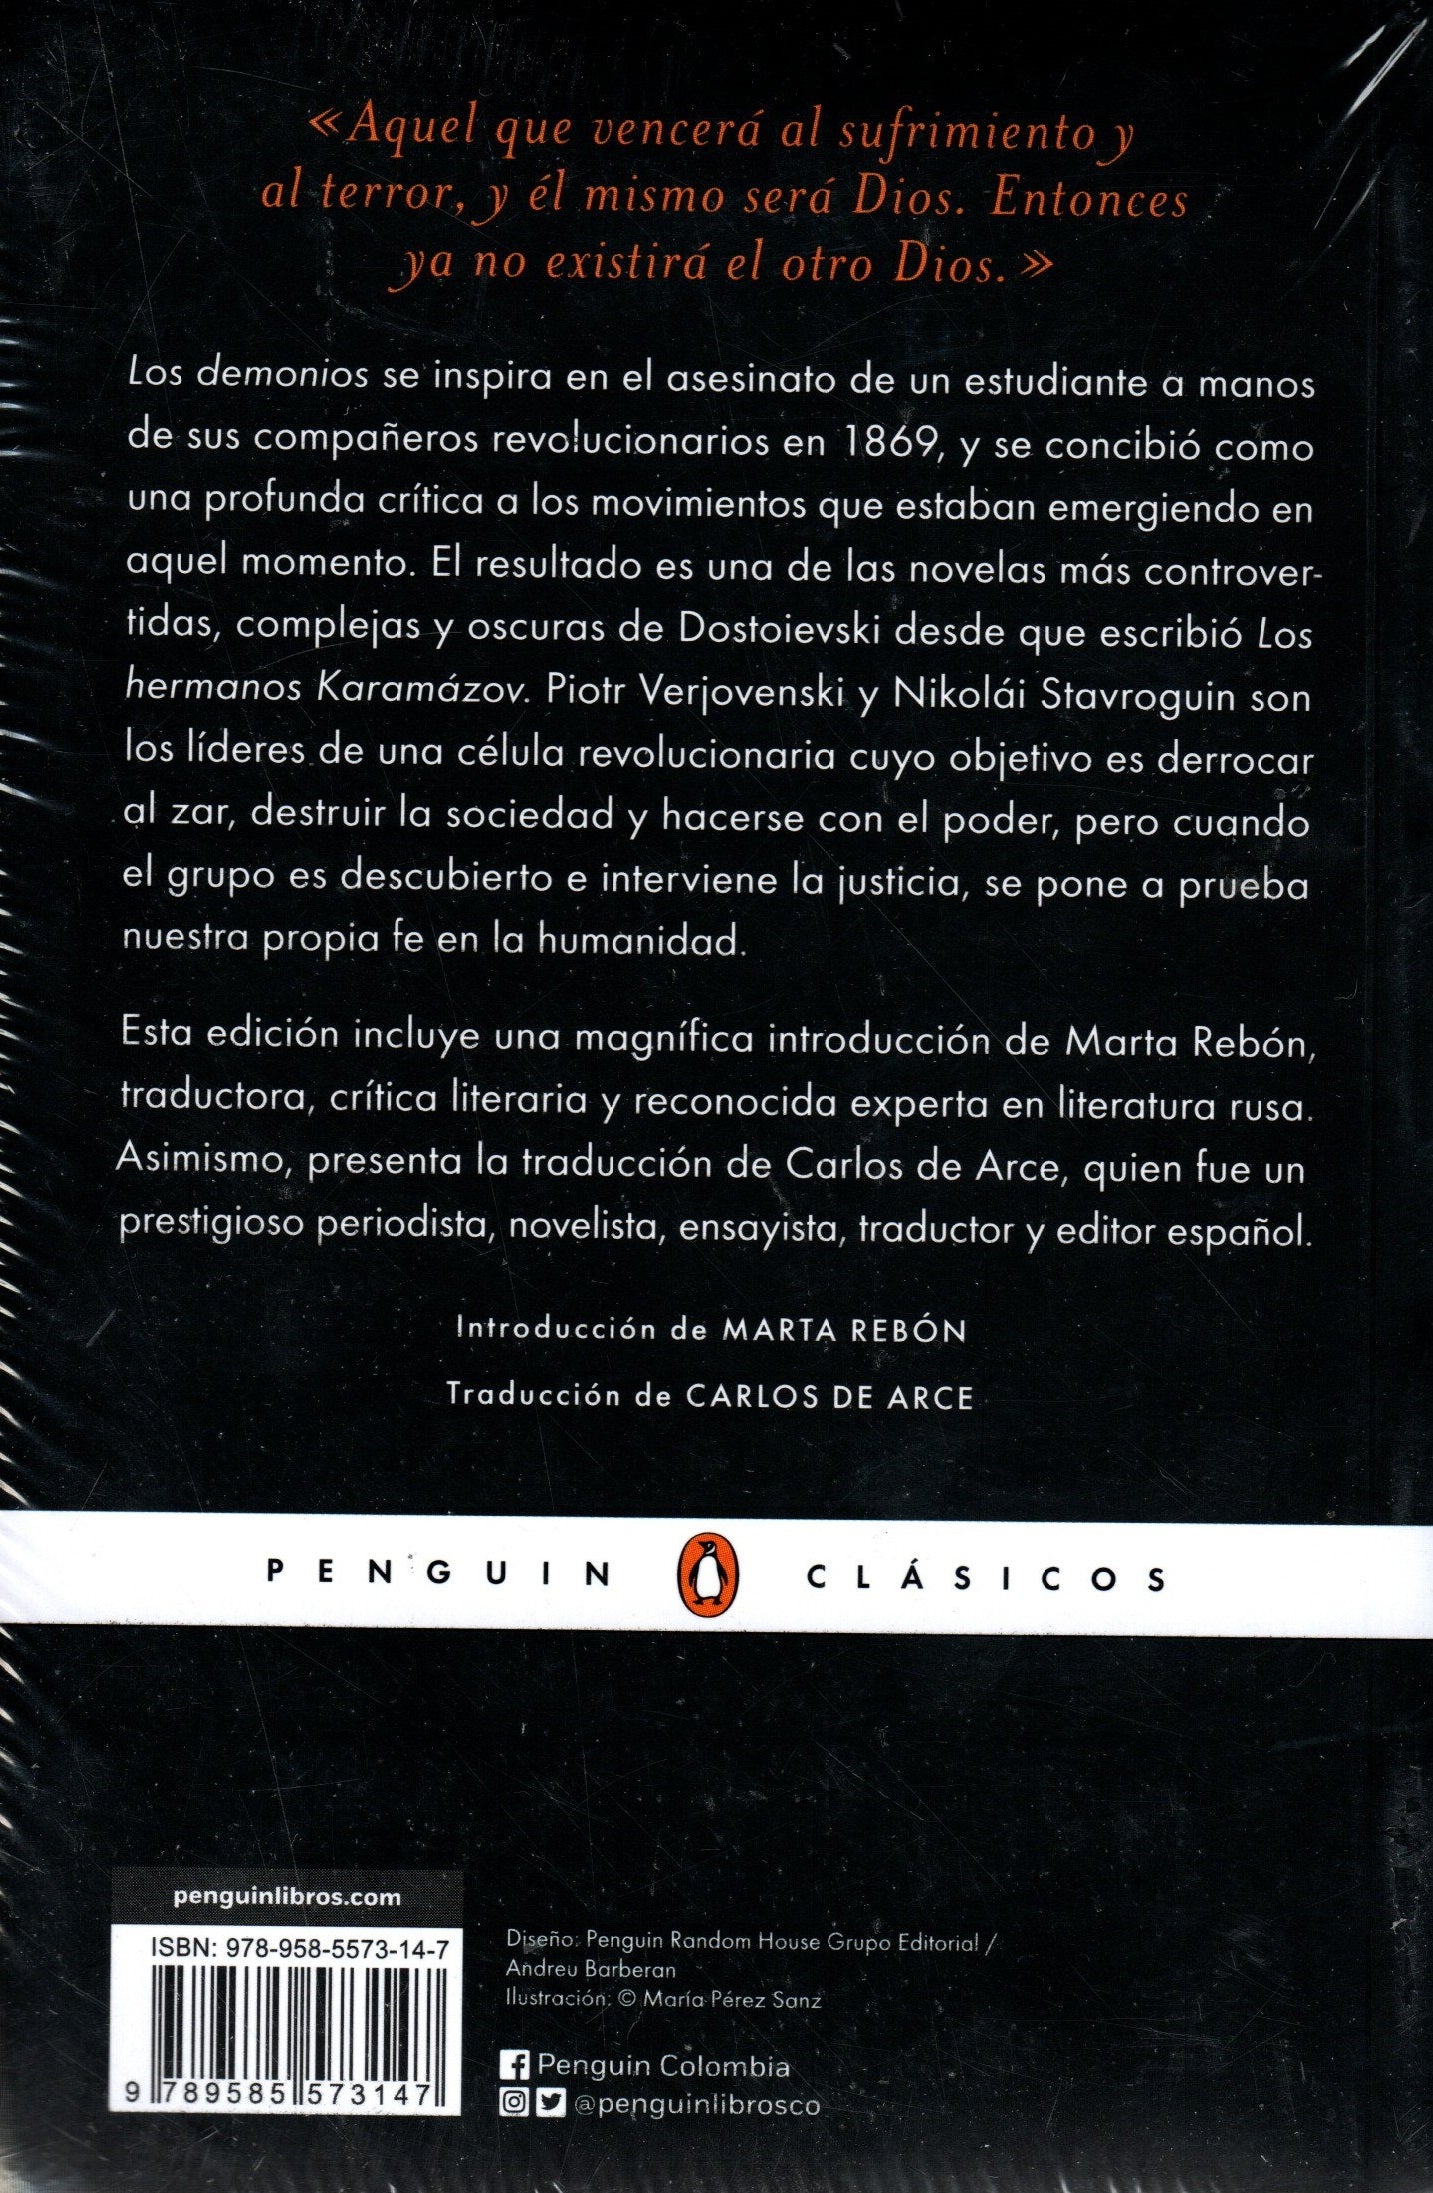 Los demonios · Dostoievski, Fiódor M.: Penguin Clásicos -978-84